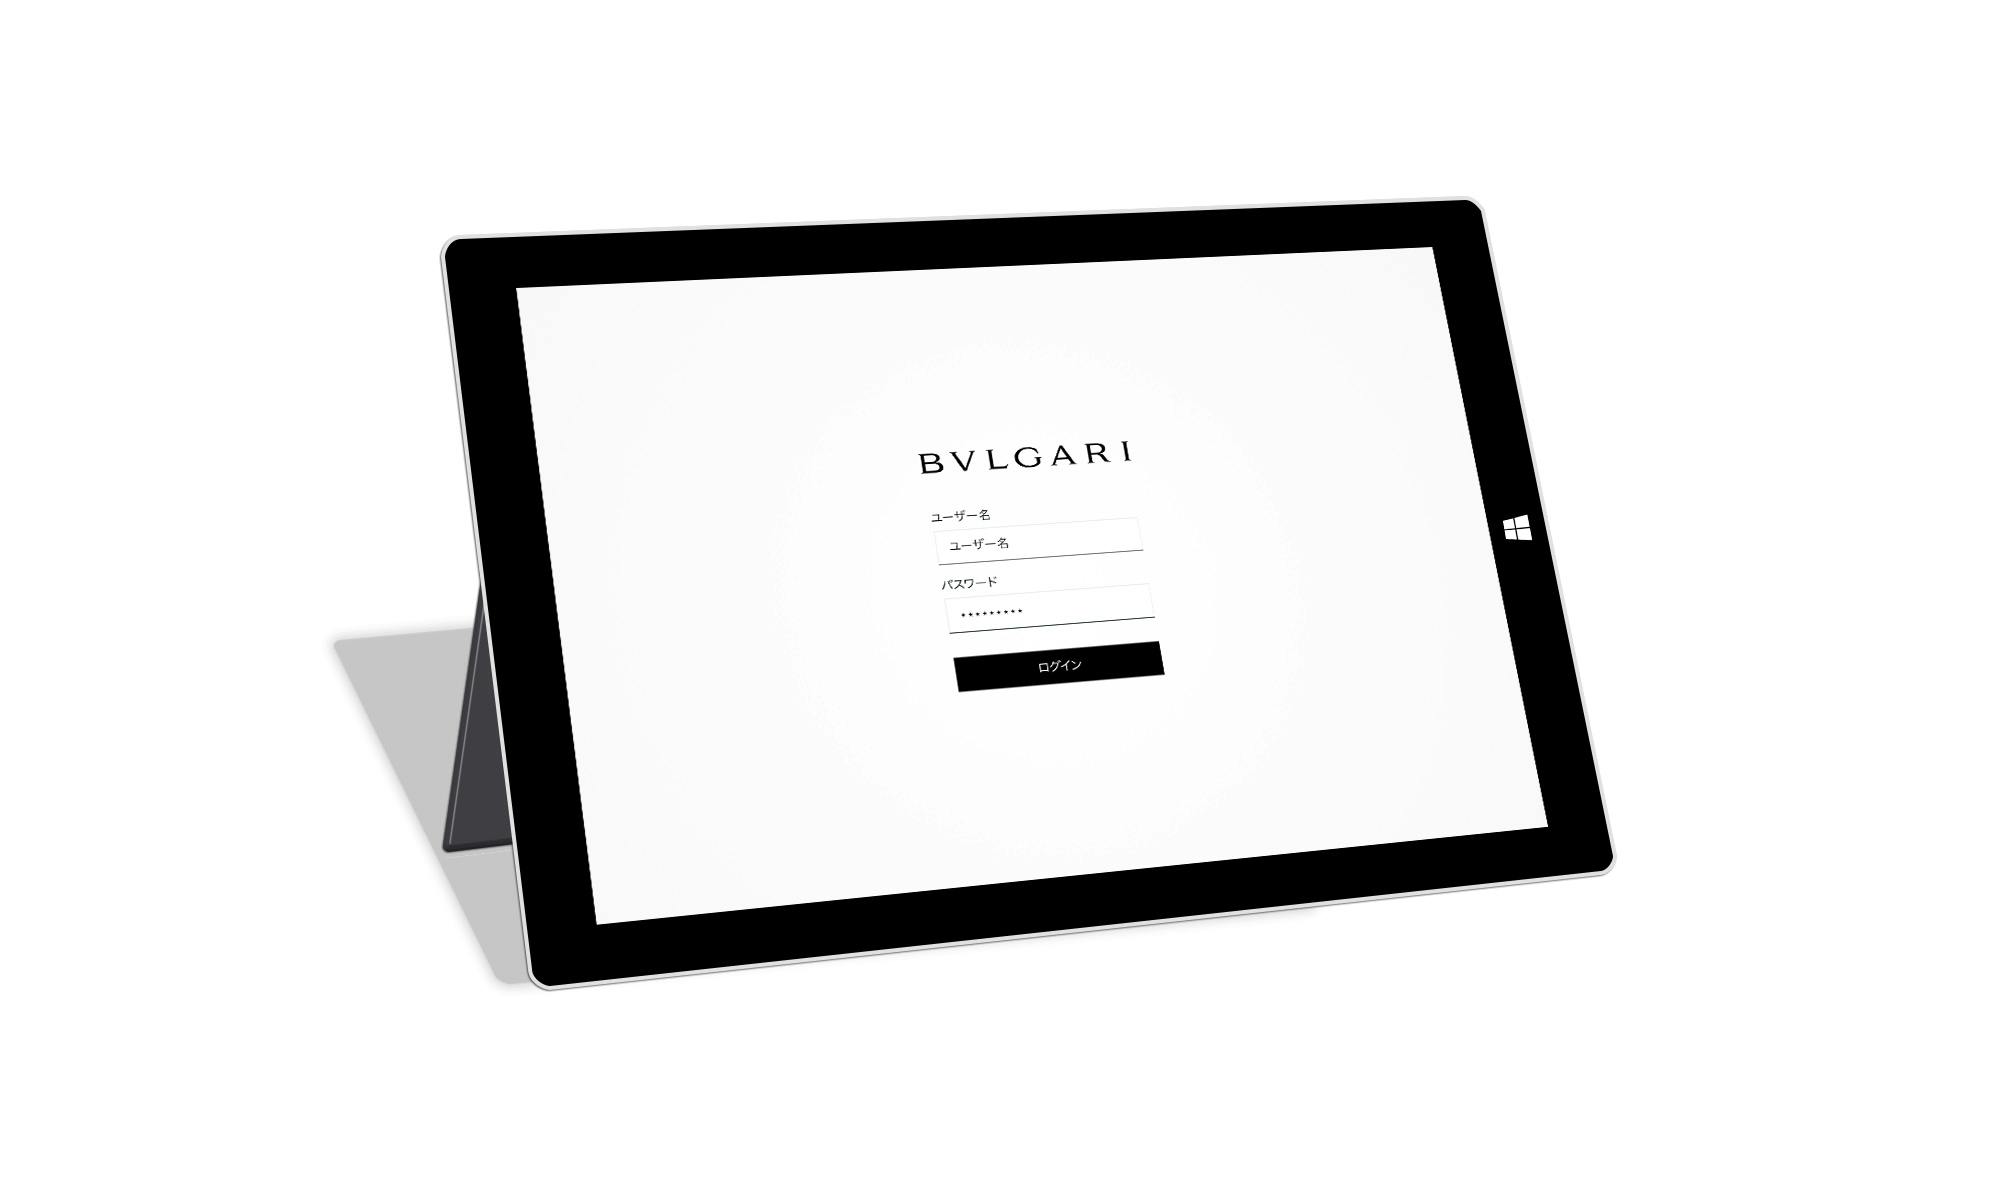 Bvlgari After-sales app iPad Mockup